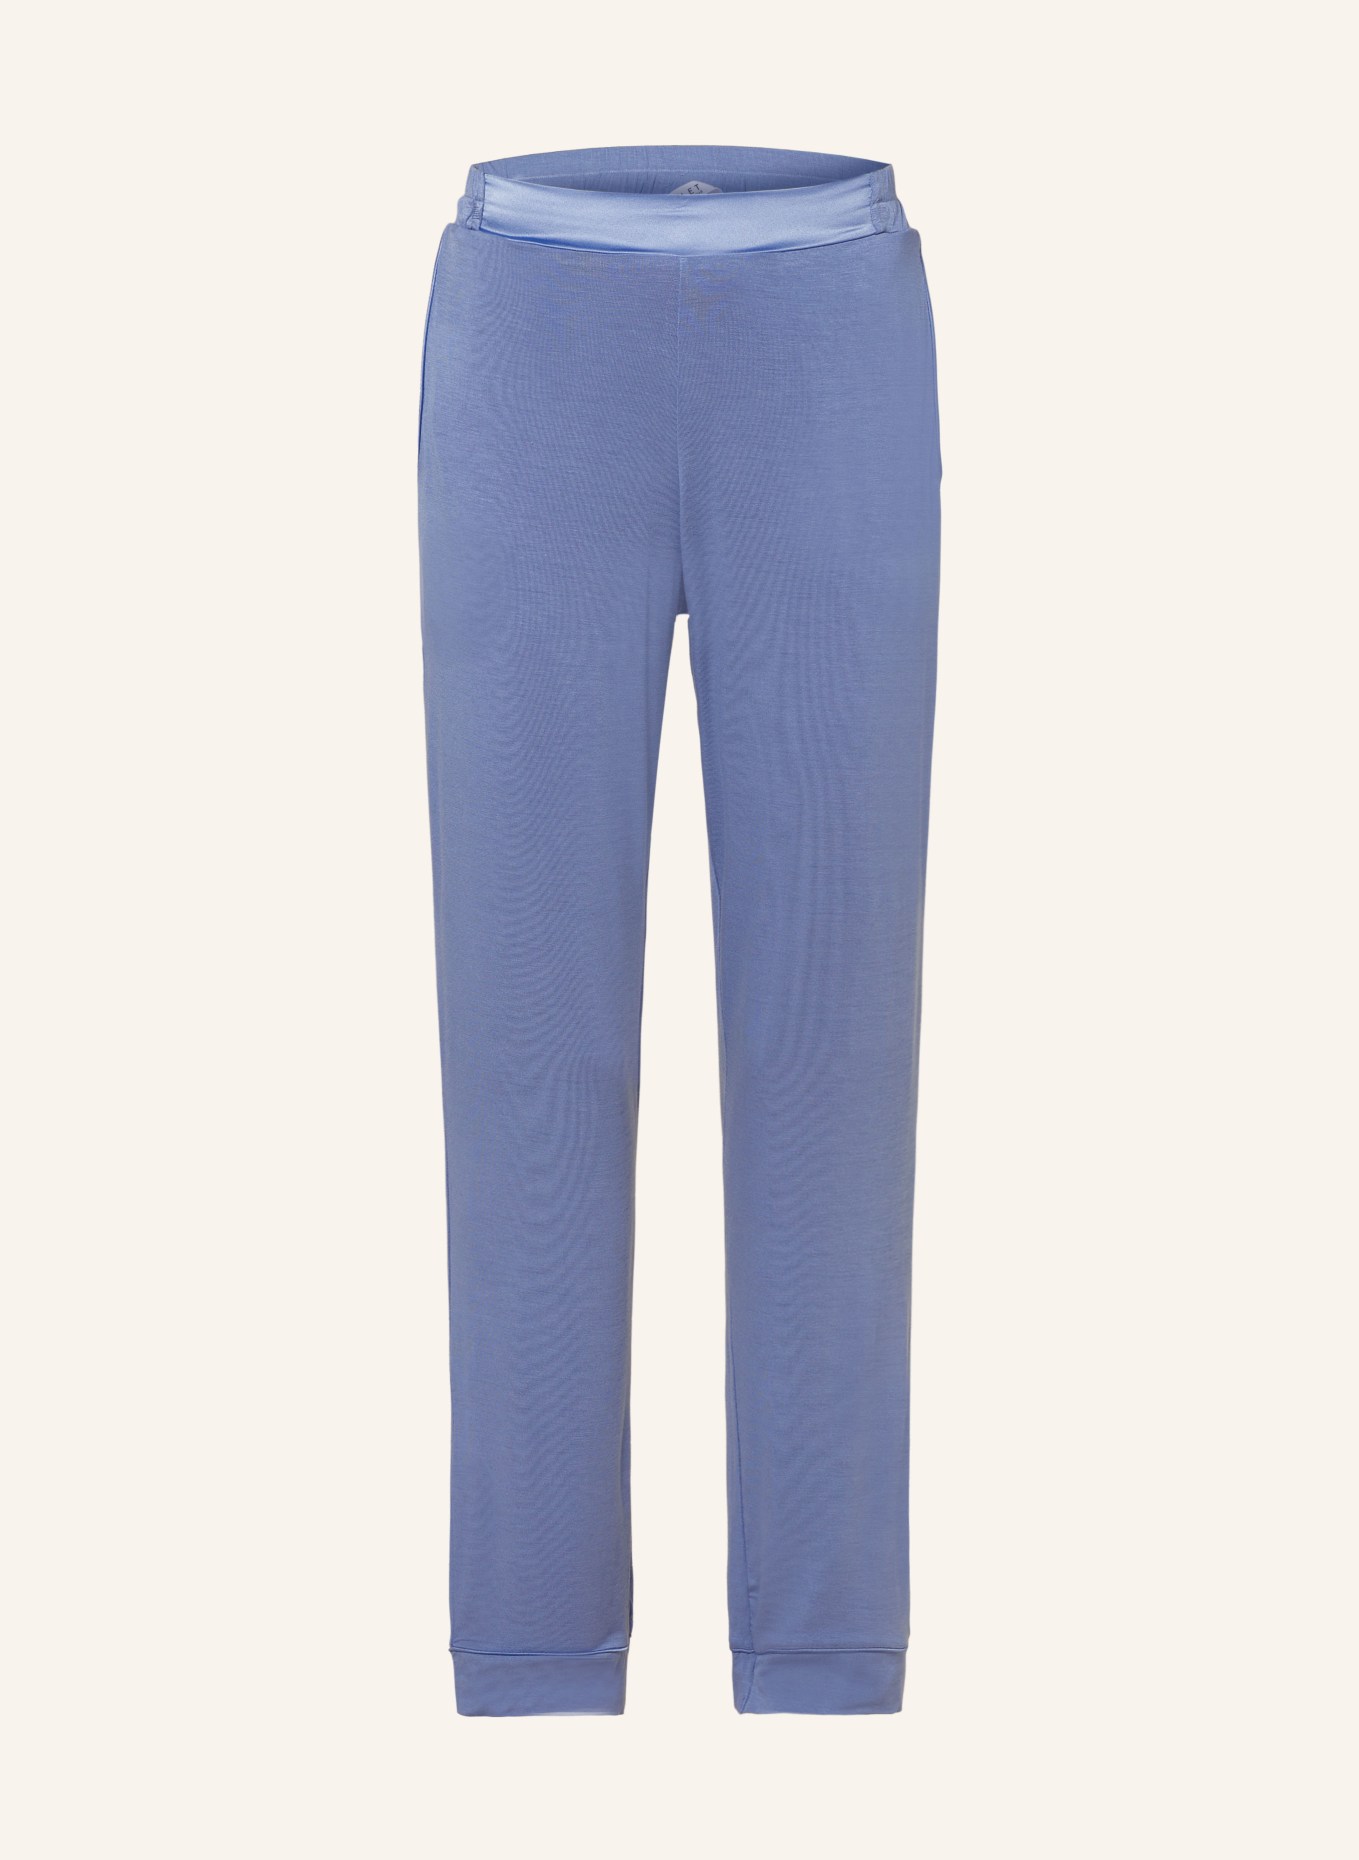 FEMILET Pajama pants DAISY, Color: BLUE GRAY (Image 1)